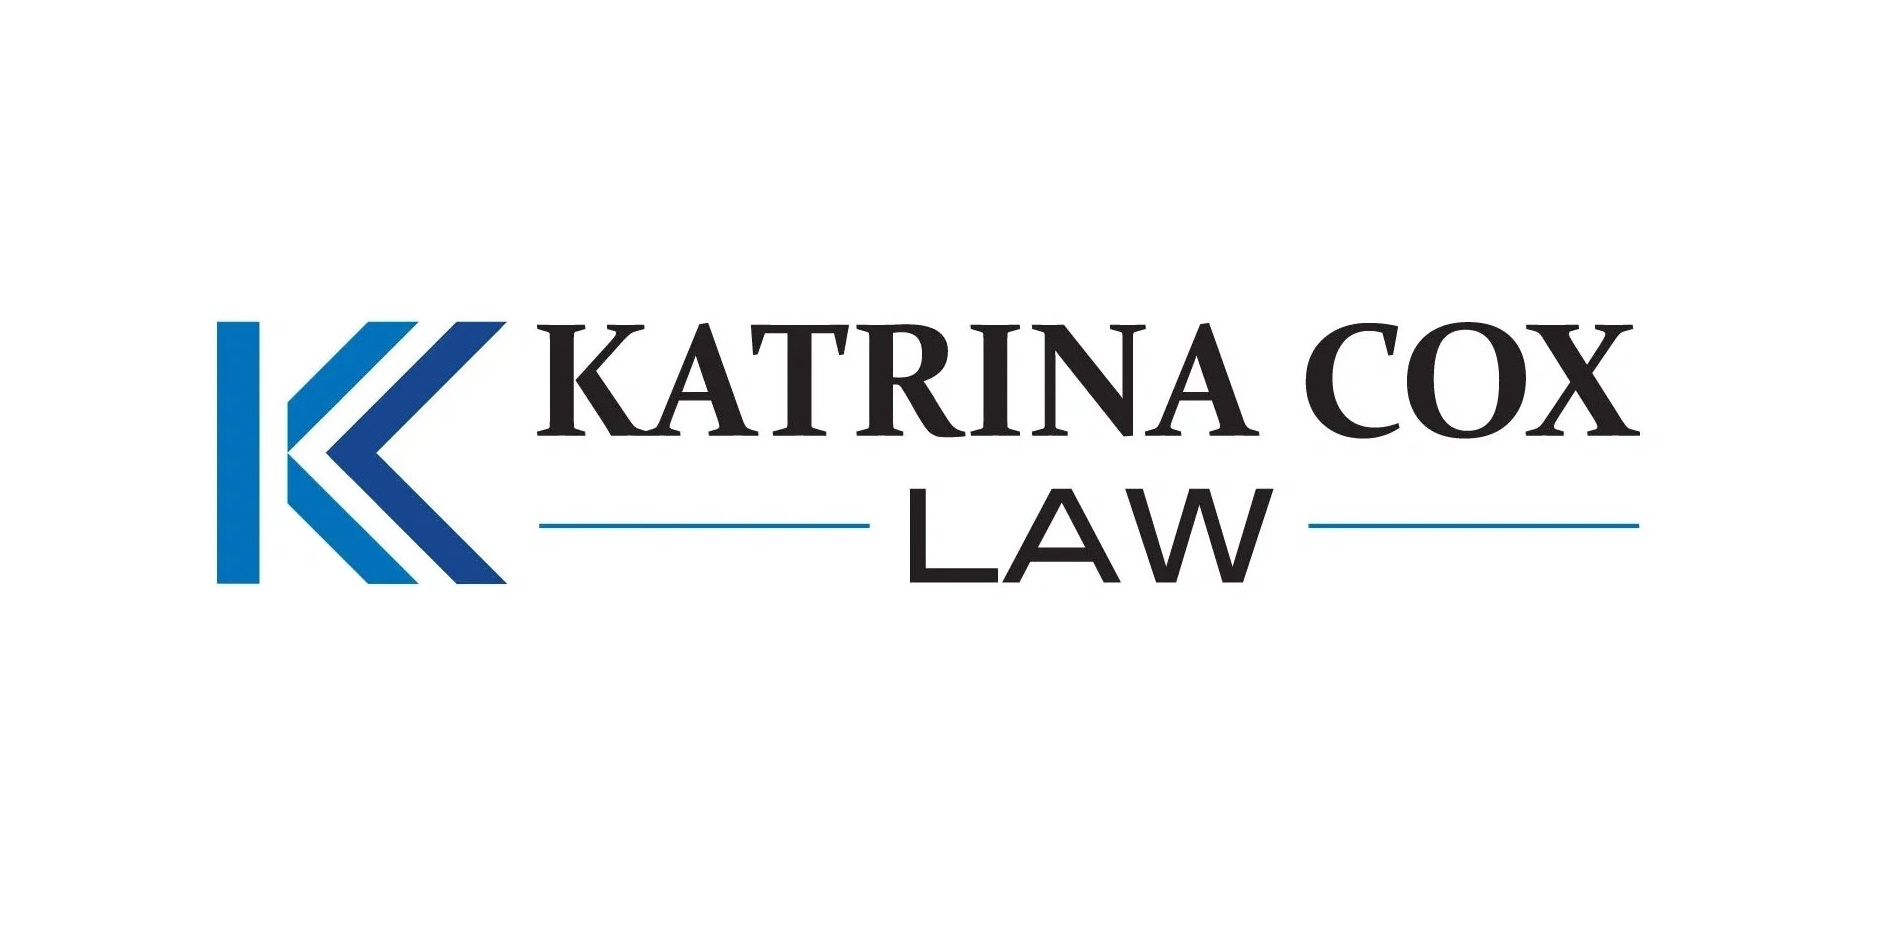 Katrina Cox Law LCC